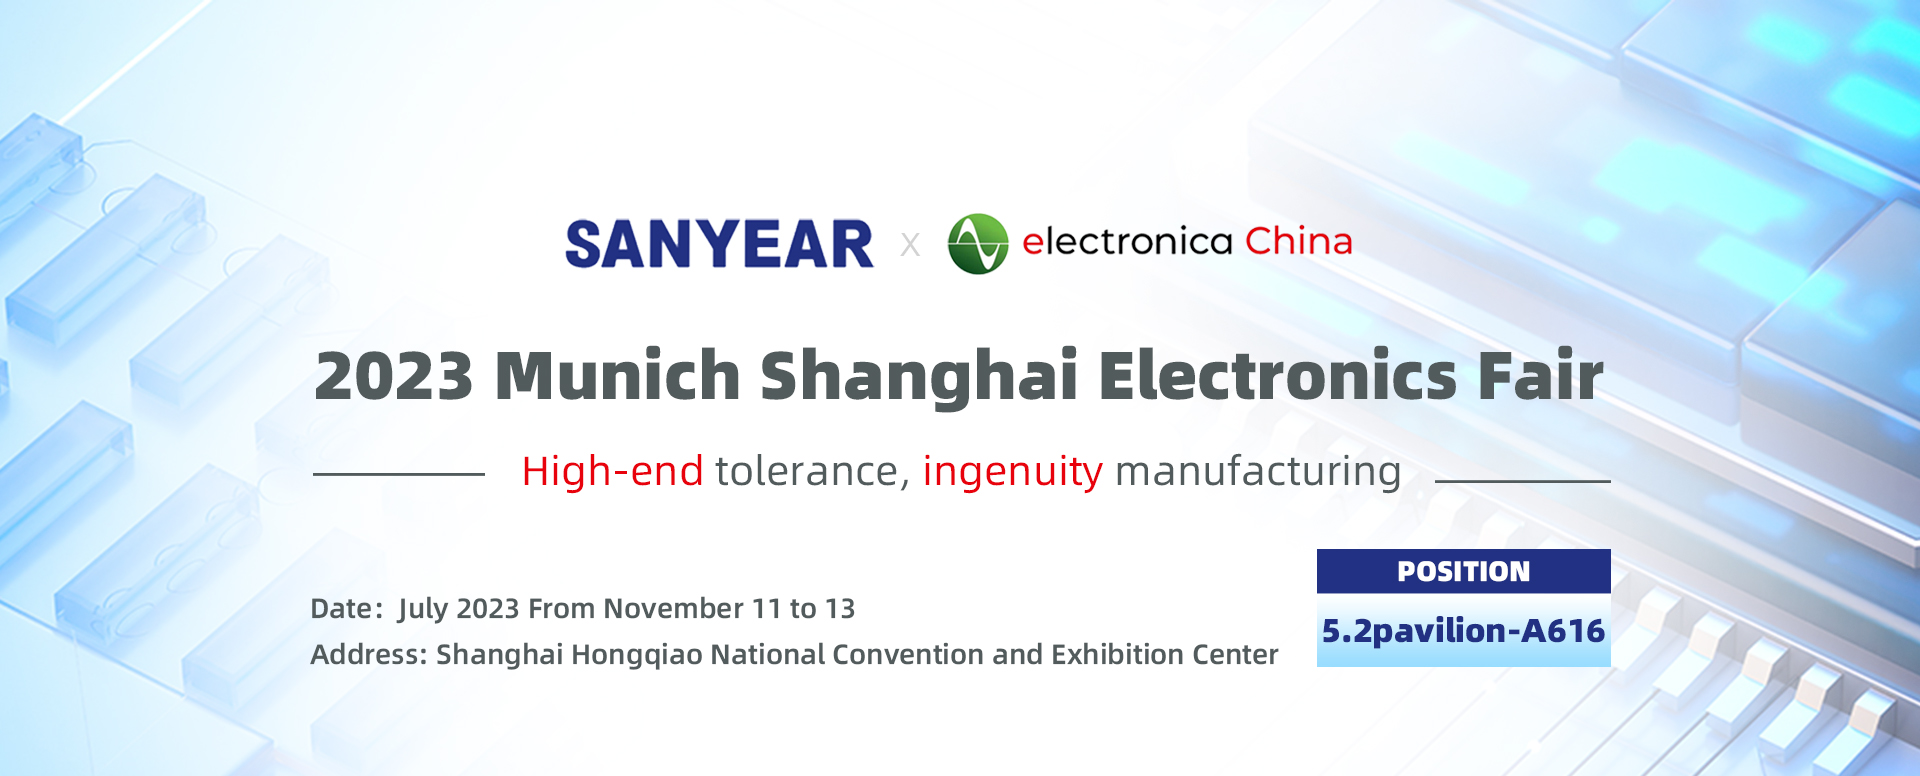 SANYEAR 2023 Munich South China Electronics Fair